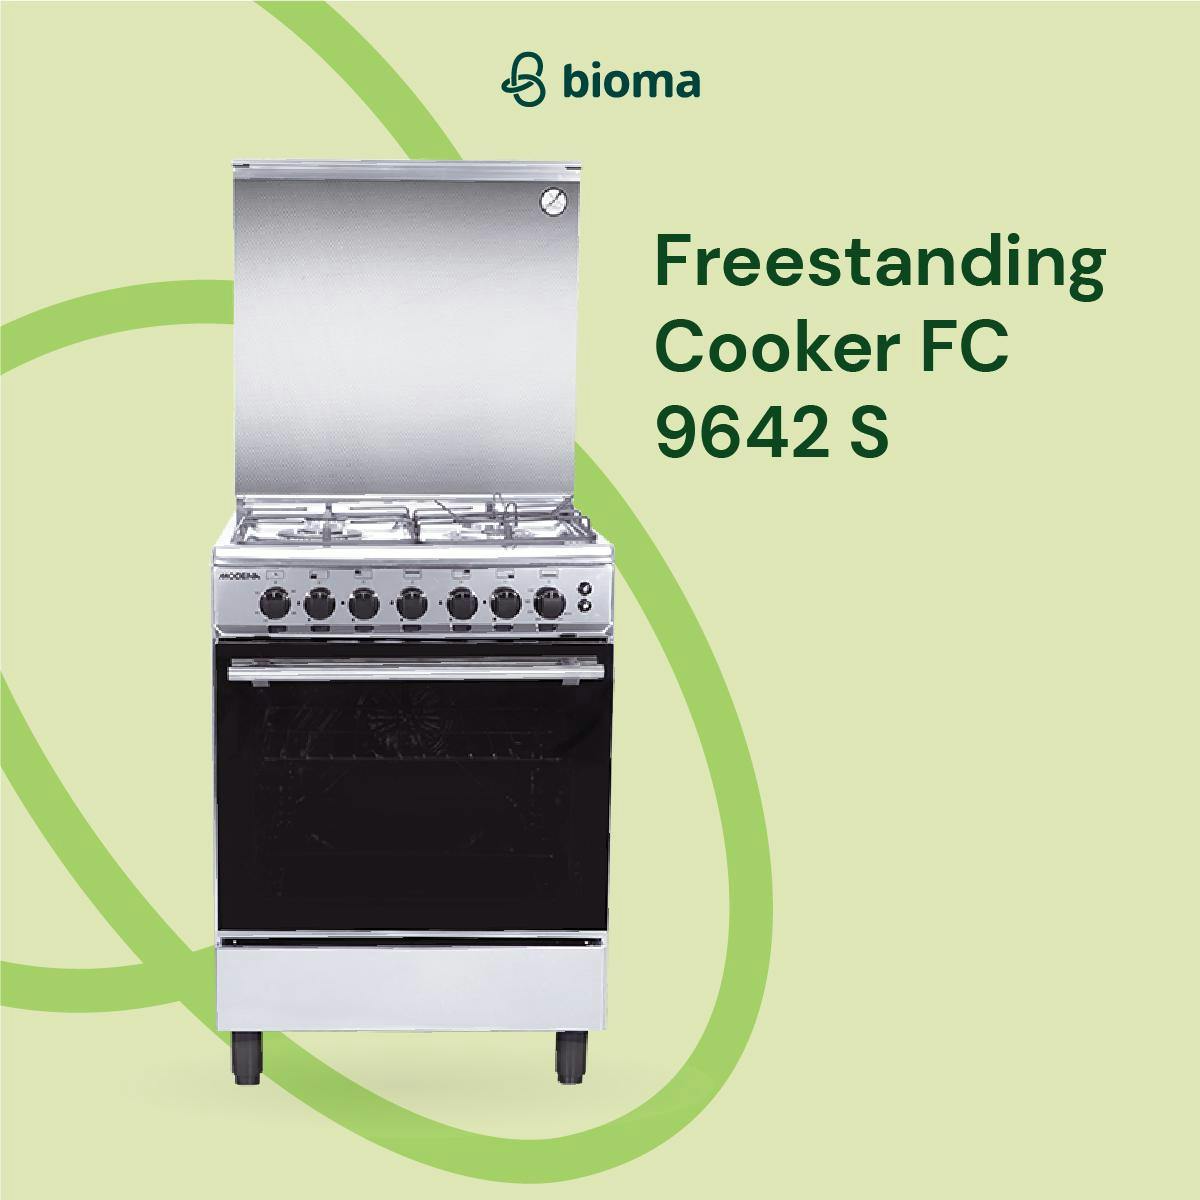 Freestanding Cooker FC 9642 S